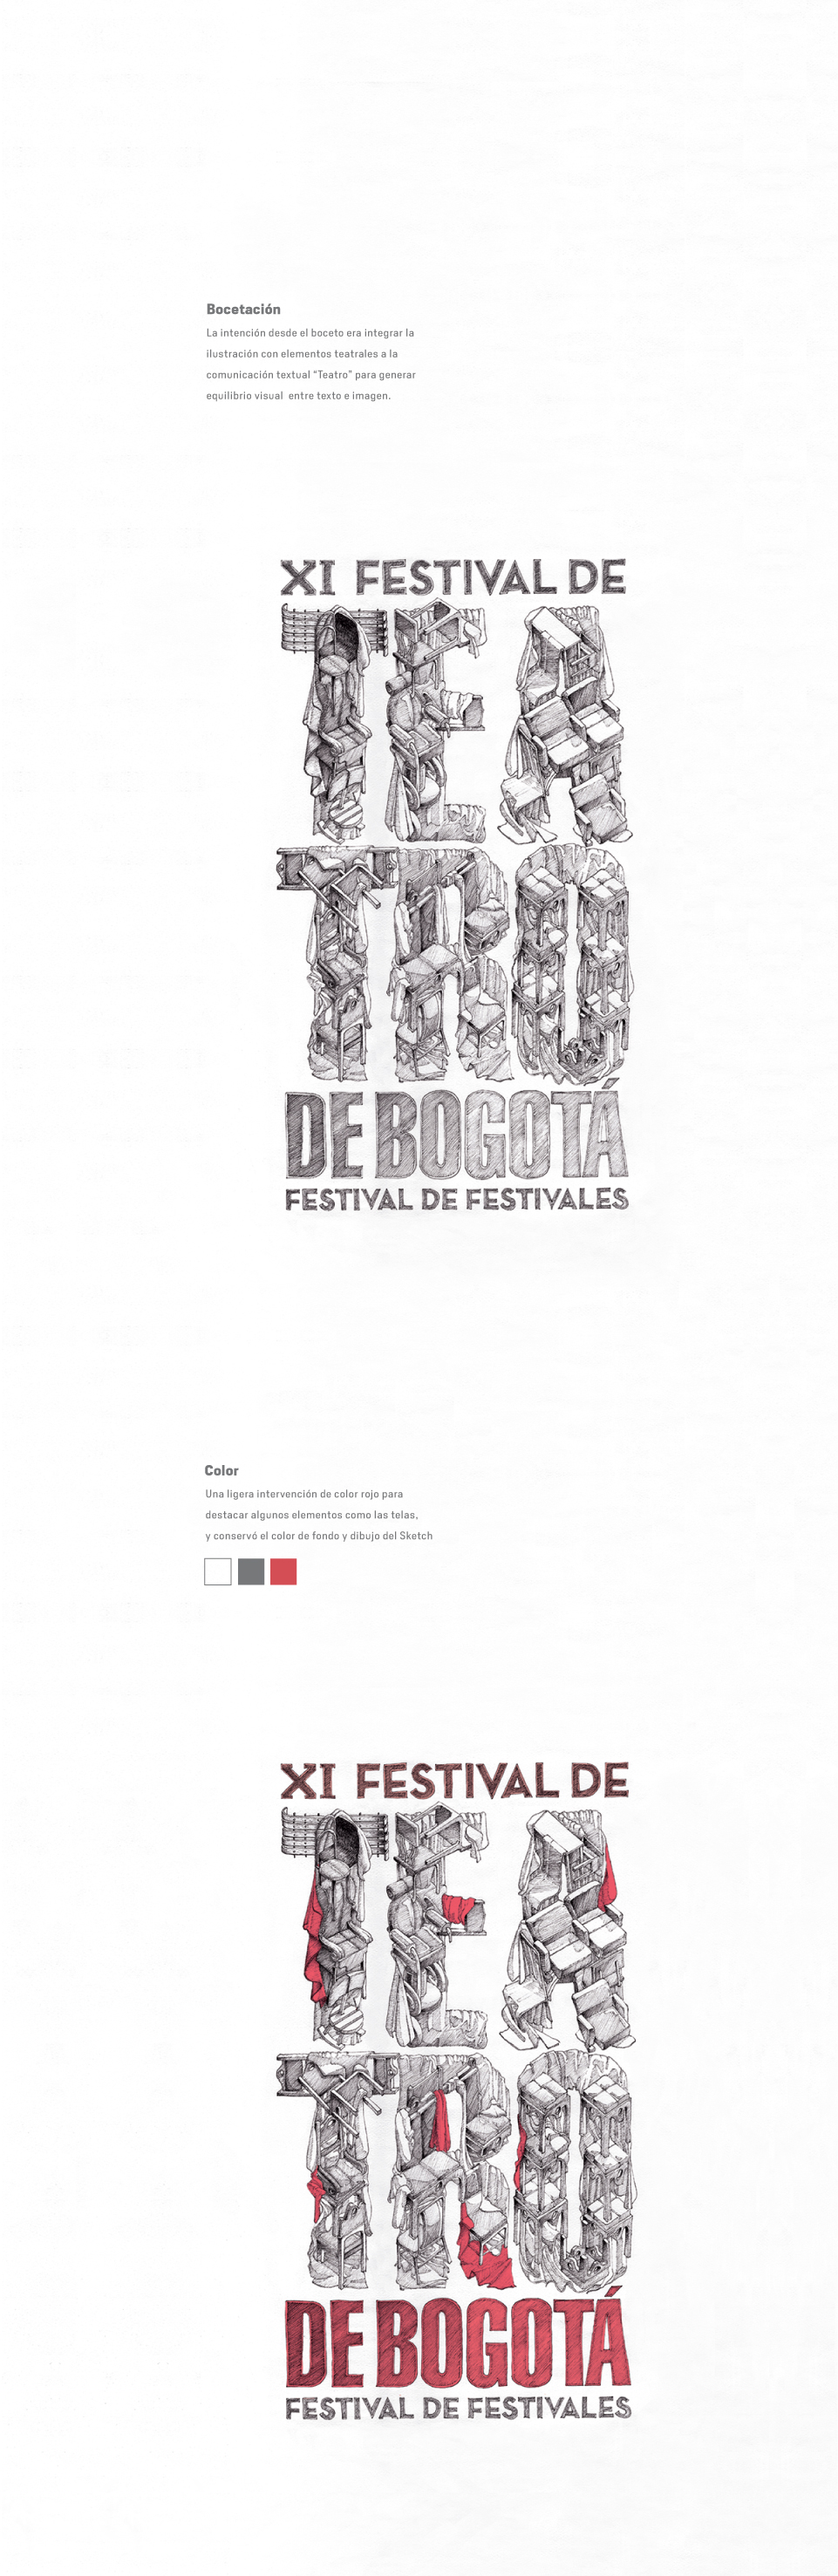 Raul Diaz Ataul bogota colombia samana caldas idartes bogotá humana ilustracion diseño poster Ilustration Served tetro festival